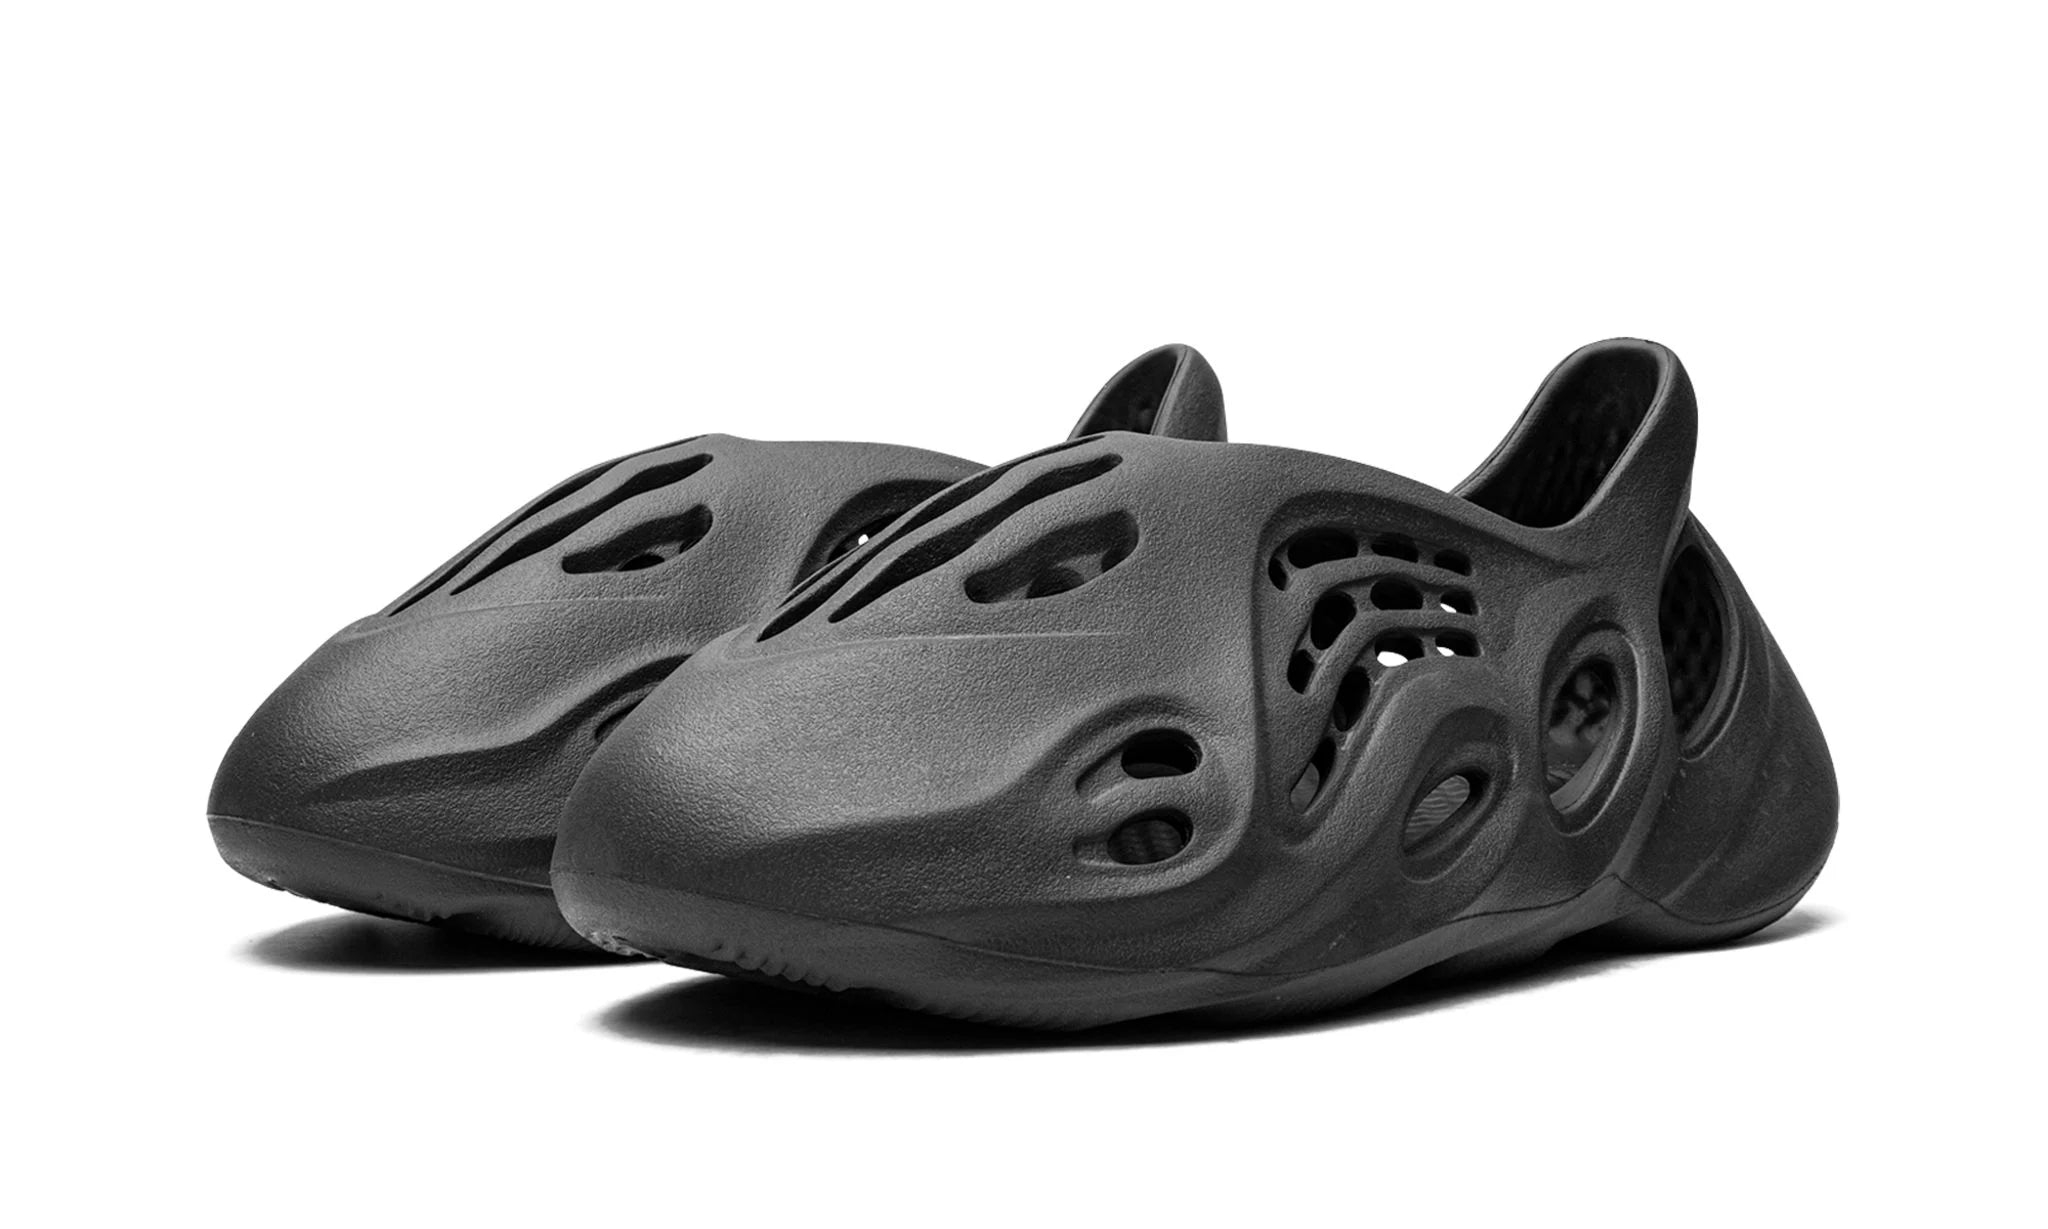 Adidas Yeezy Foam Runner Onyx - - - Pirri